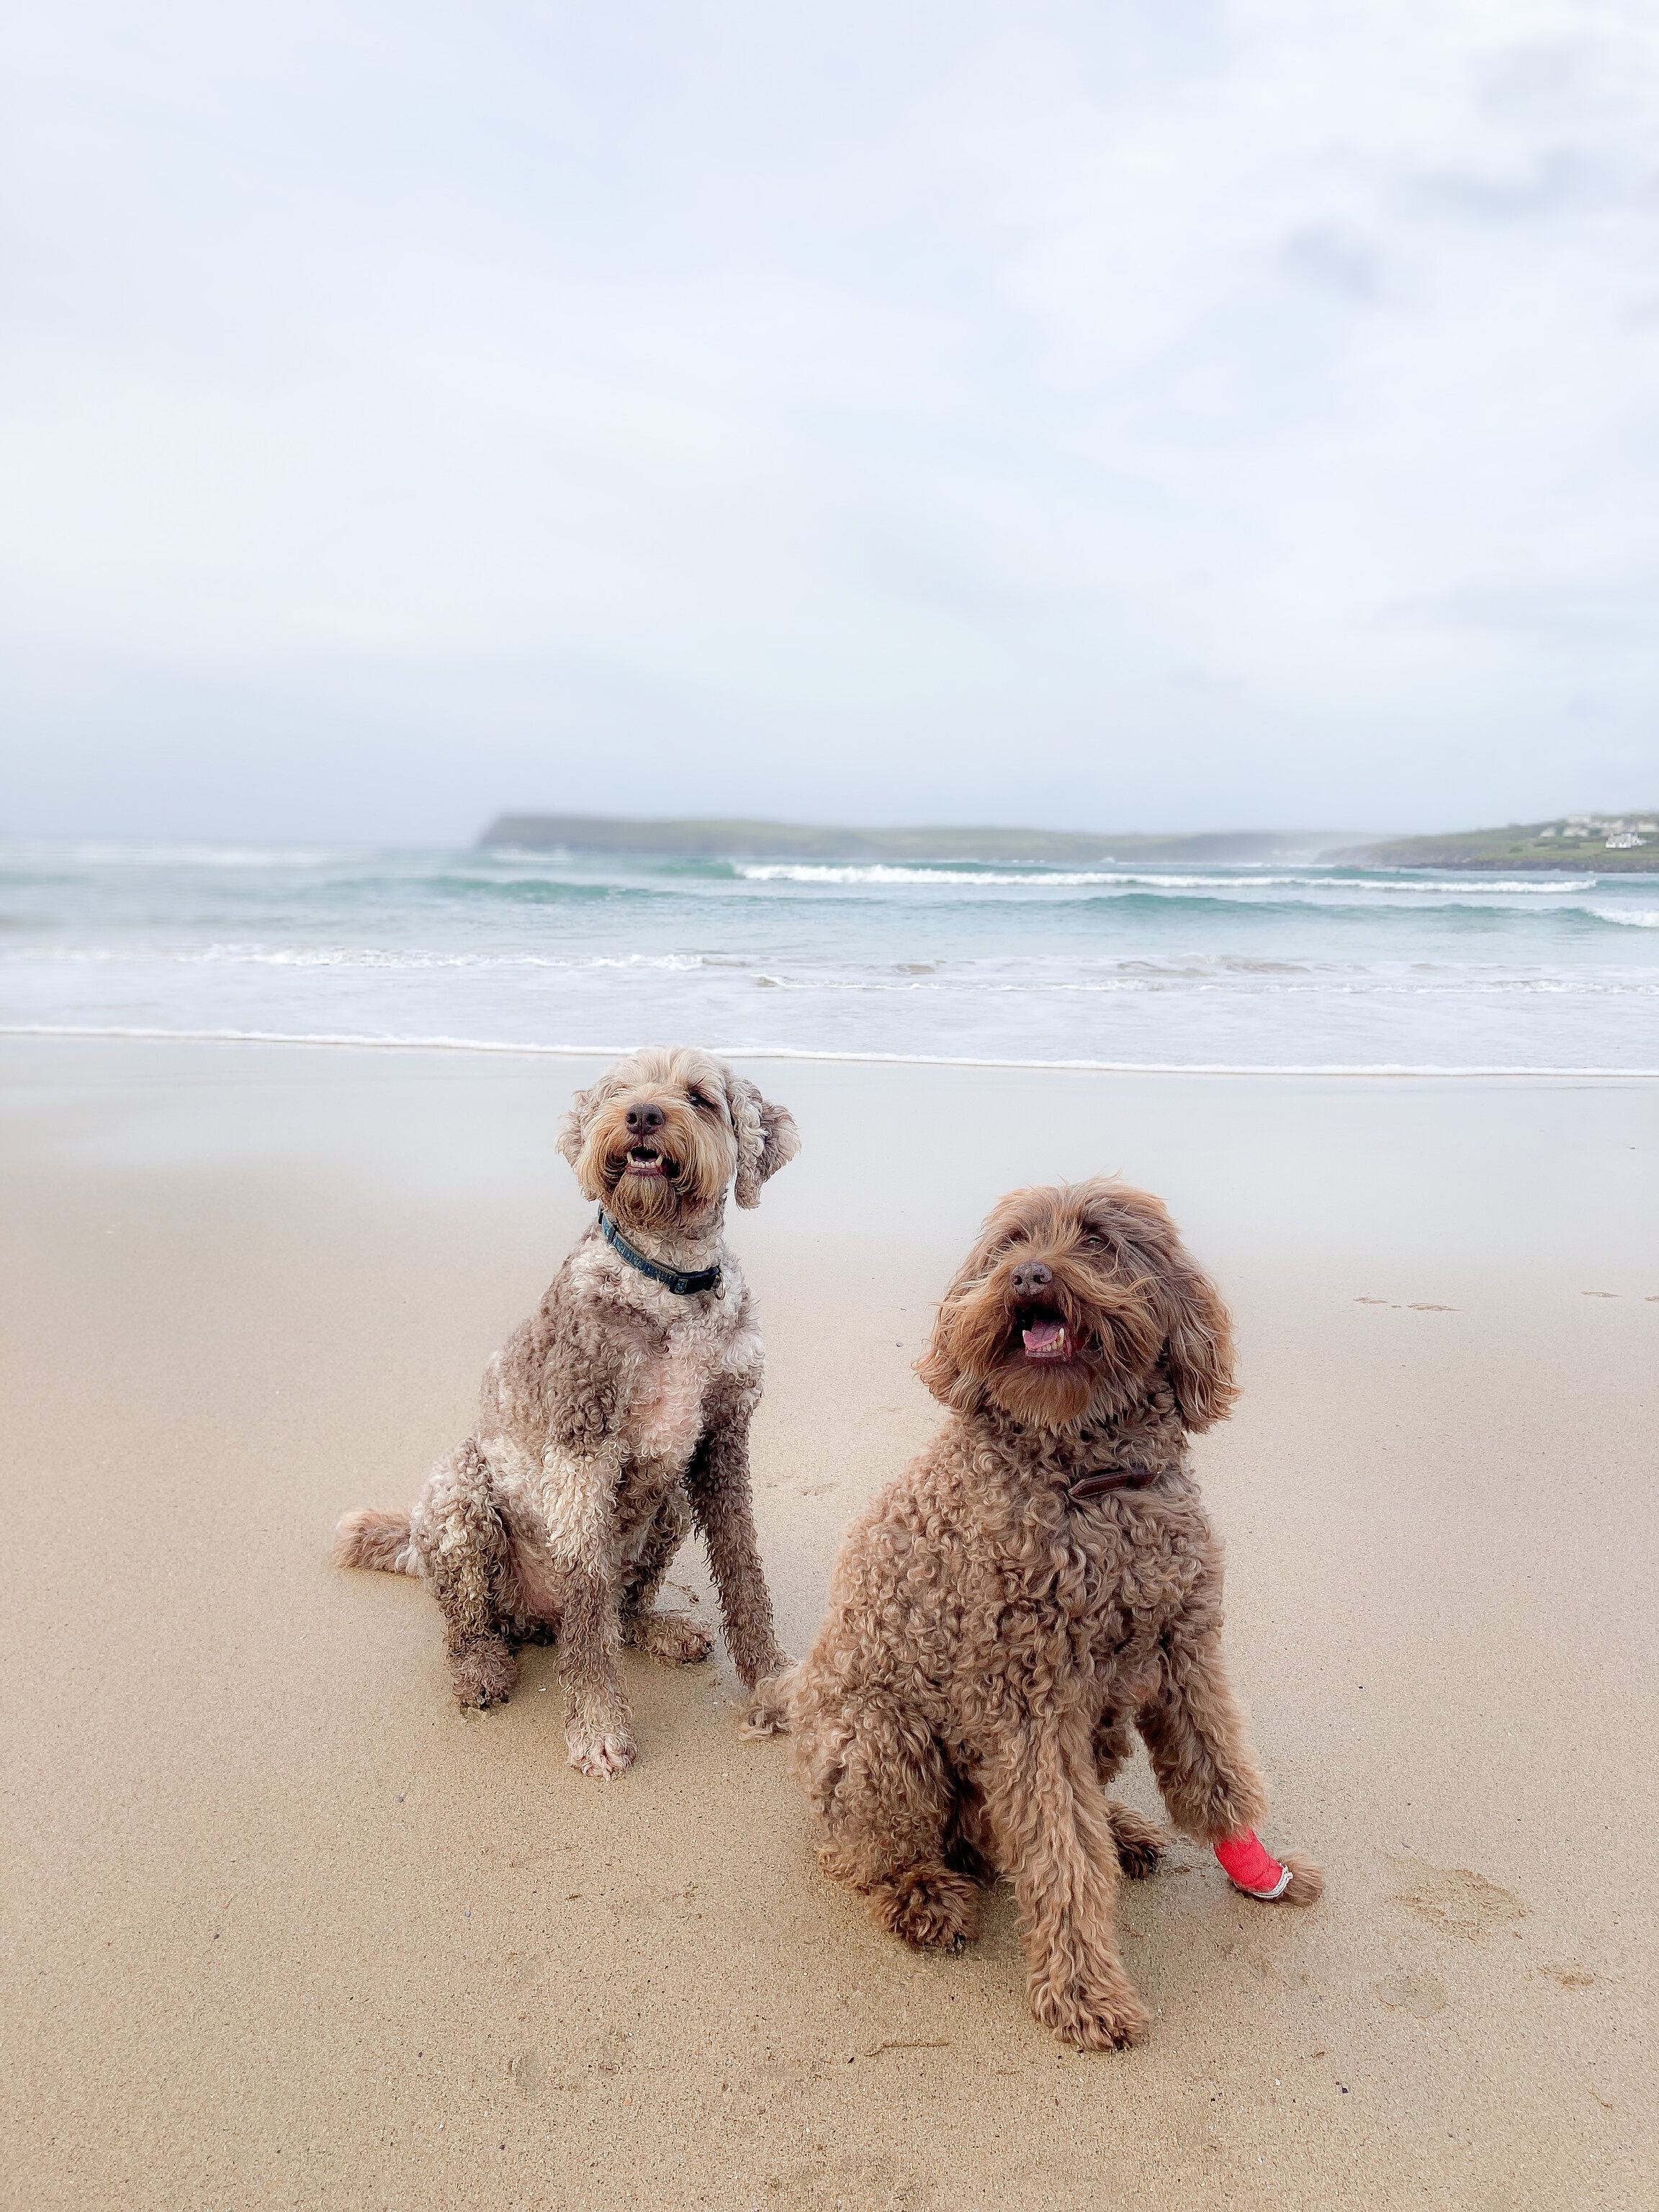 Dogs on the beach walk